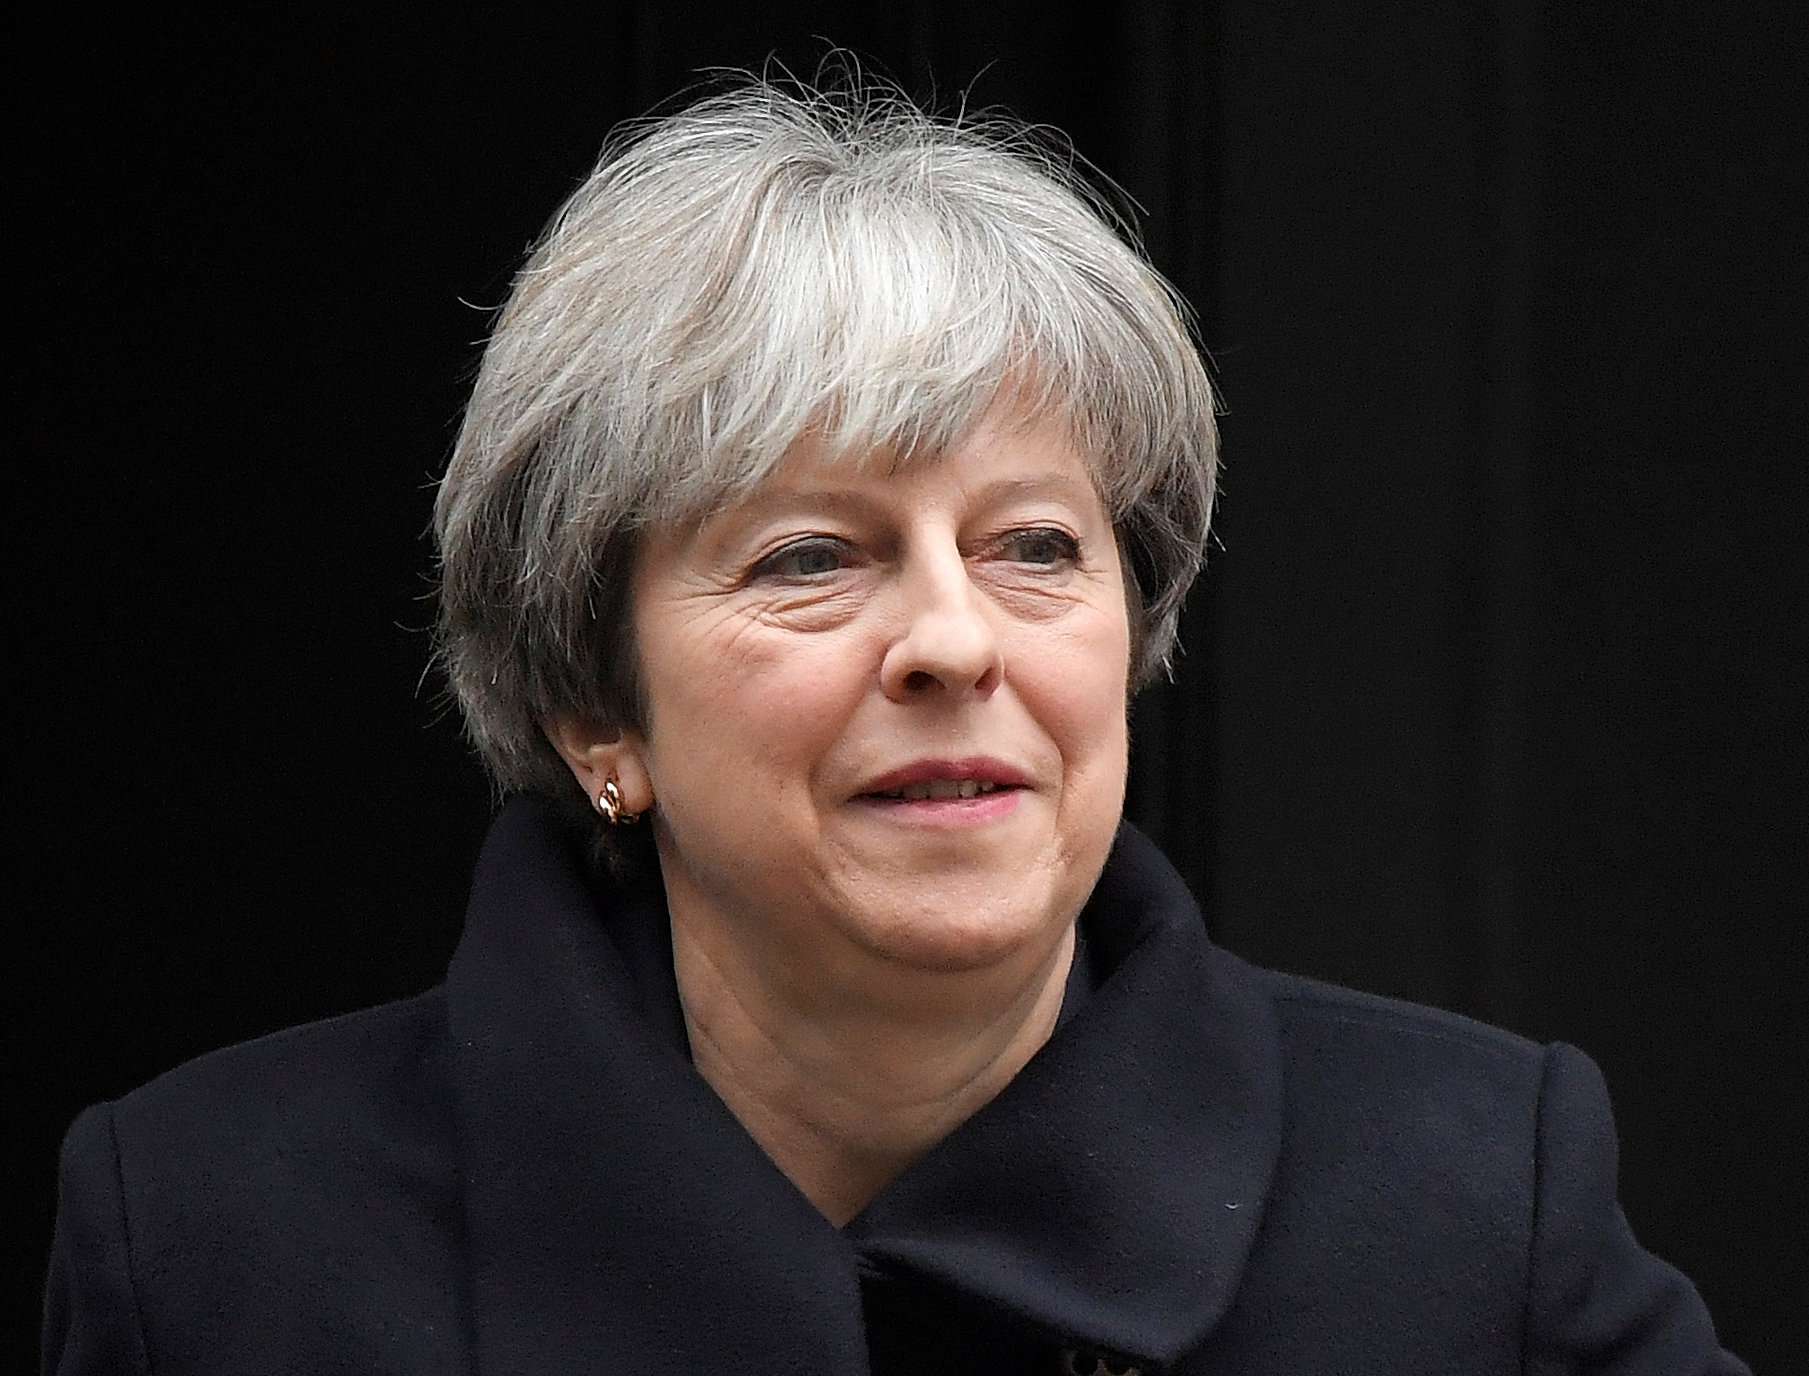 Plot to kill British Prime Minister foiled